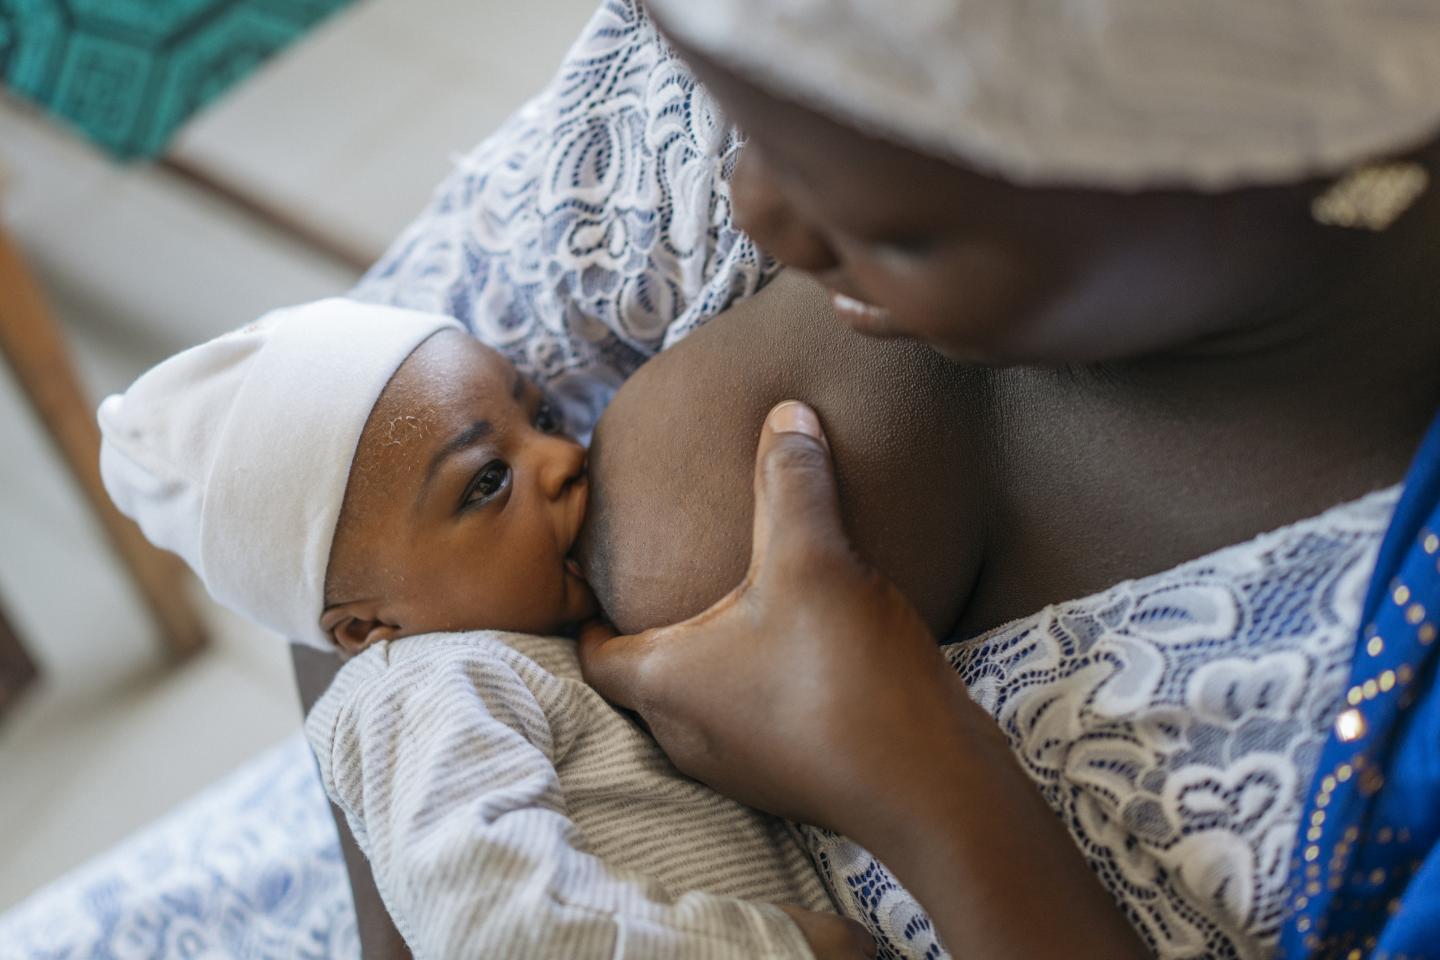 https://leadership.ng/wp-content/uploads/2022/08/Breastfeeding-1.jpg